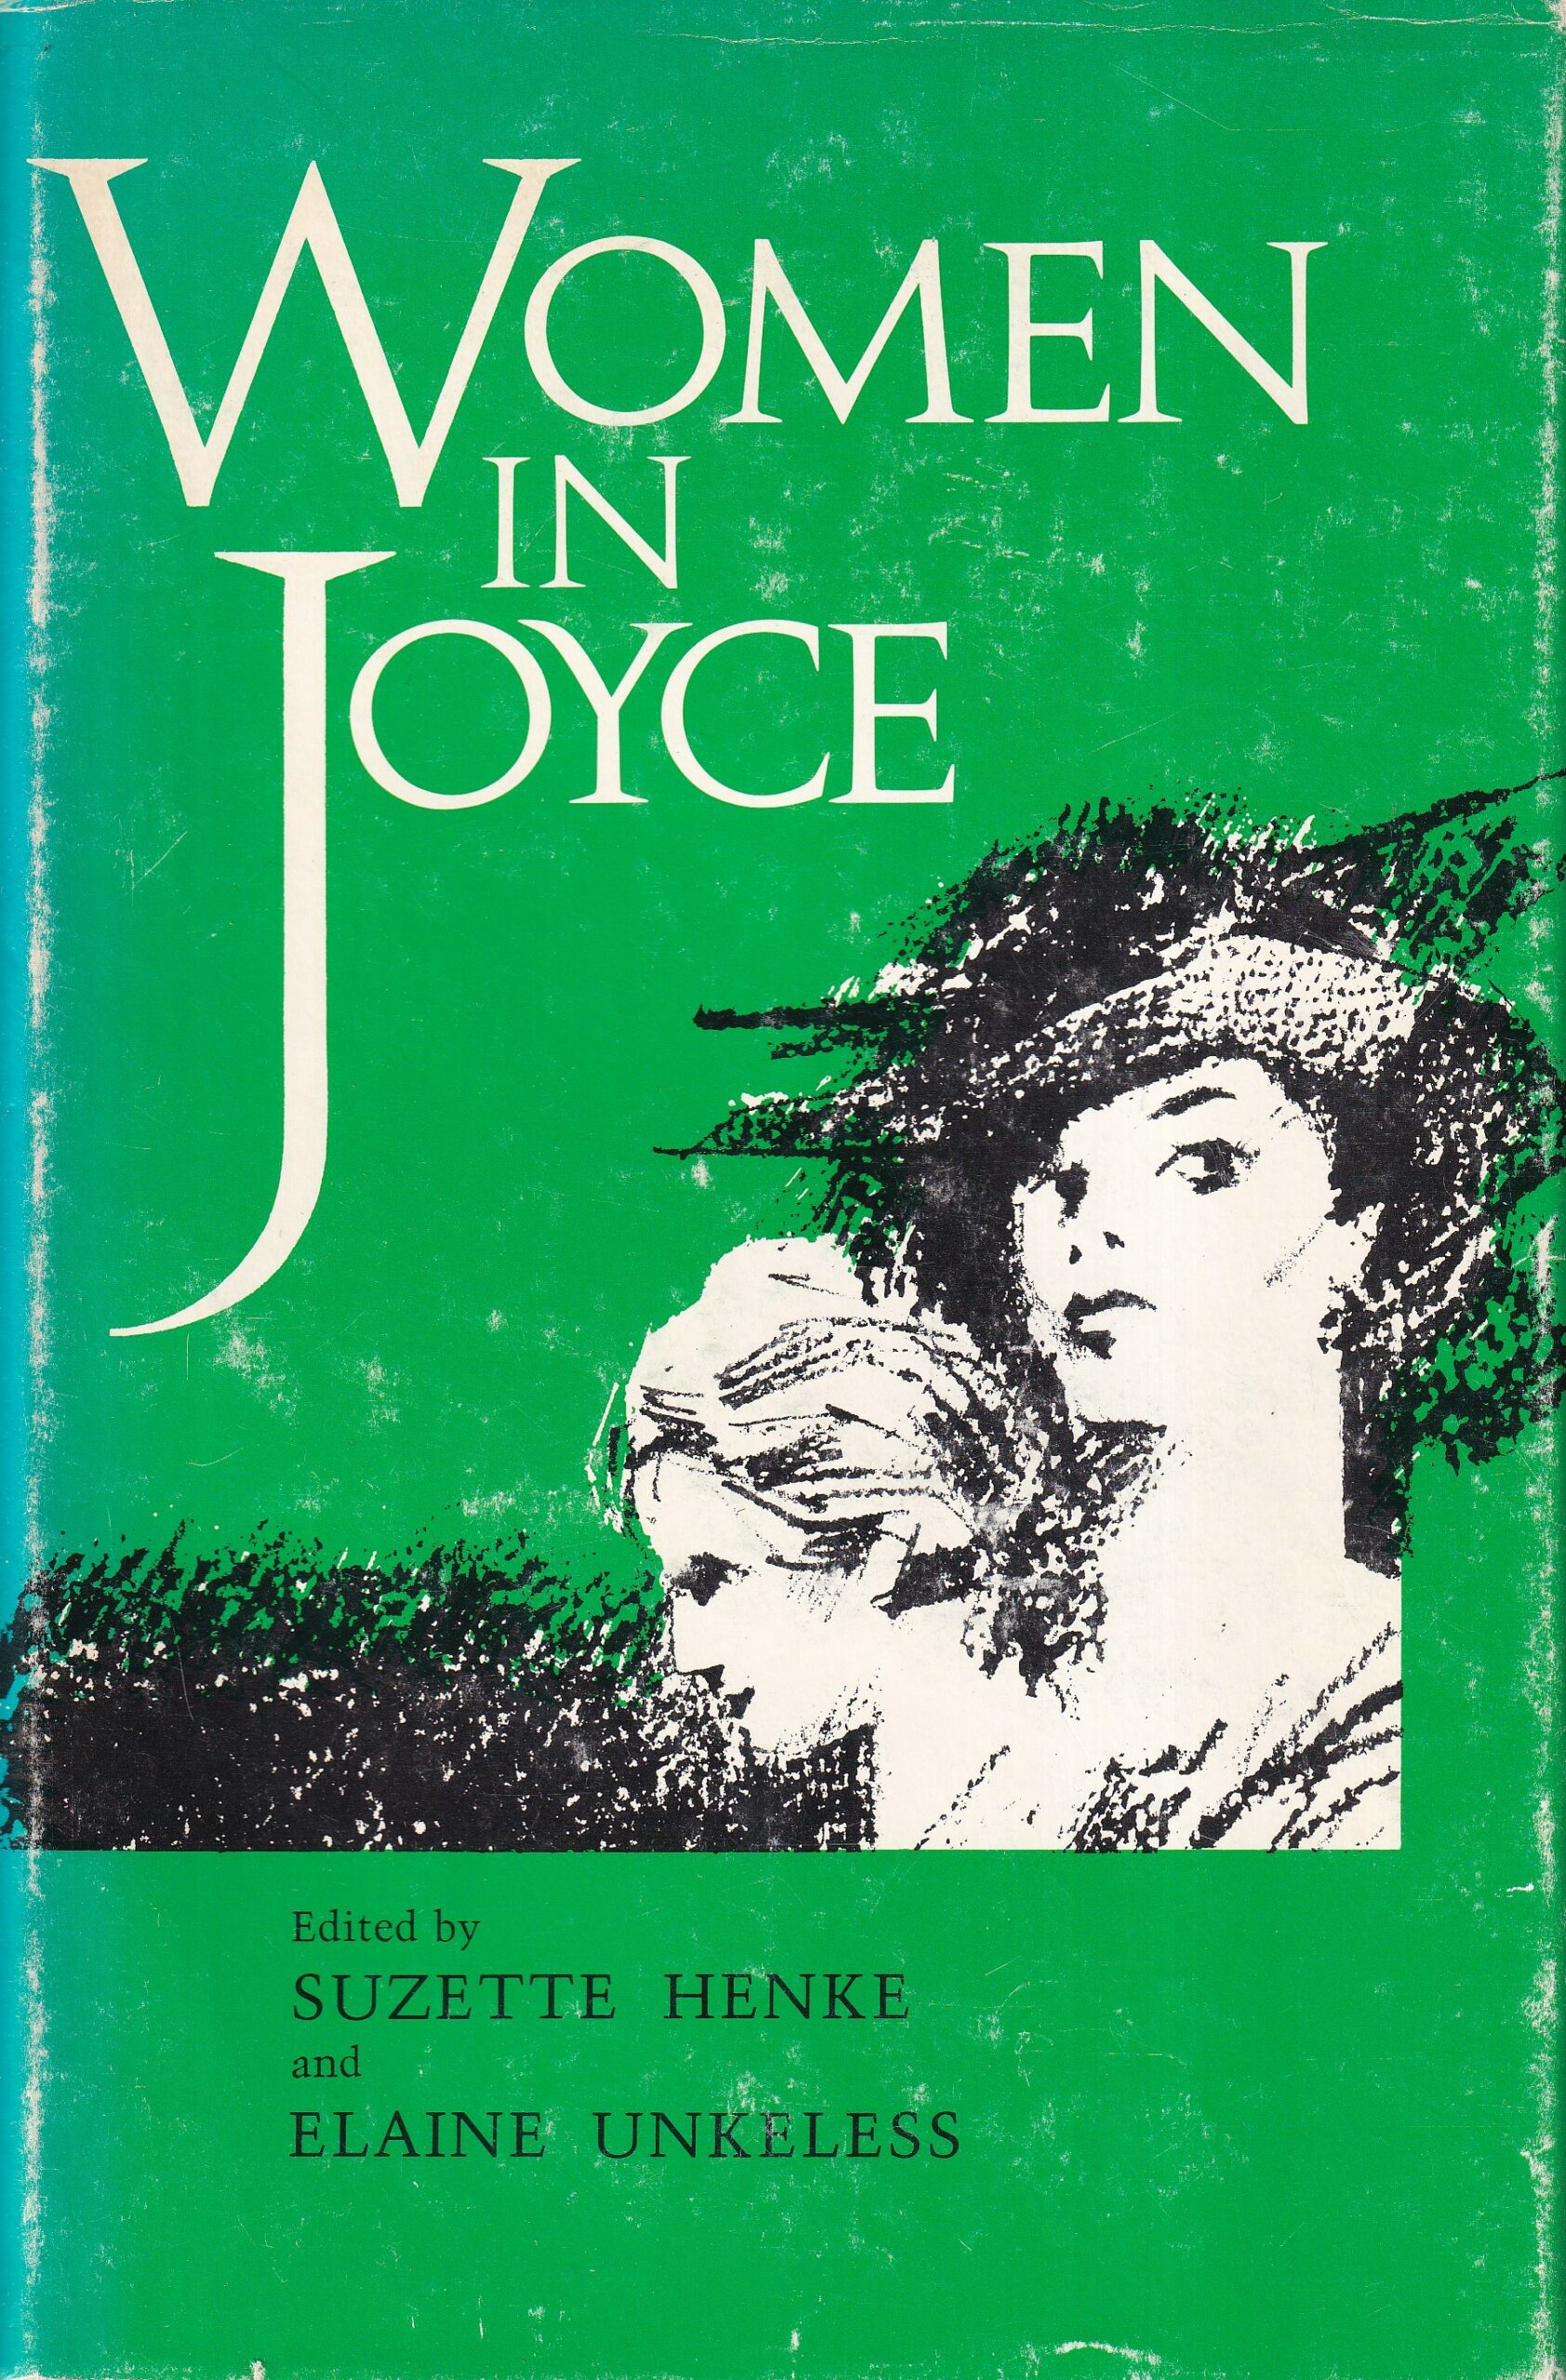 Women in Joyce by Suzette Henke and Elaine Unkless (eds.)